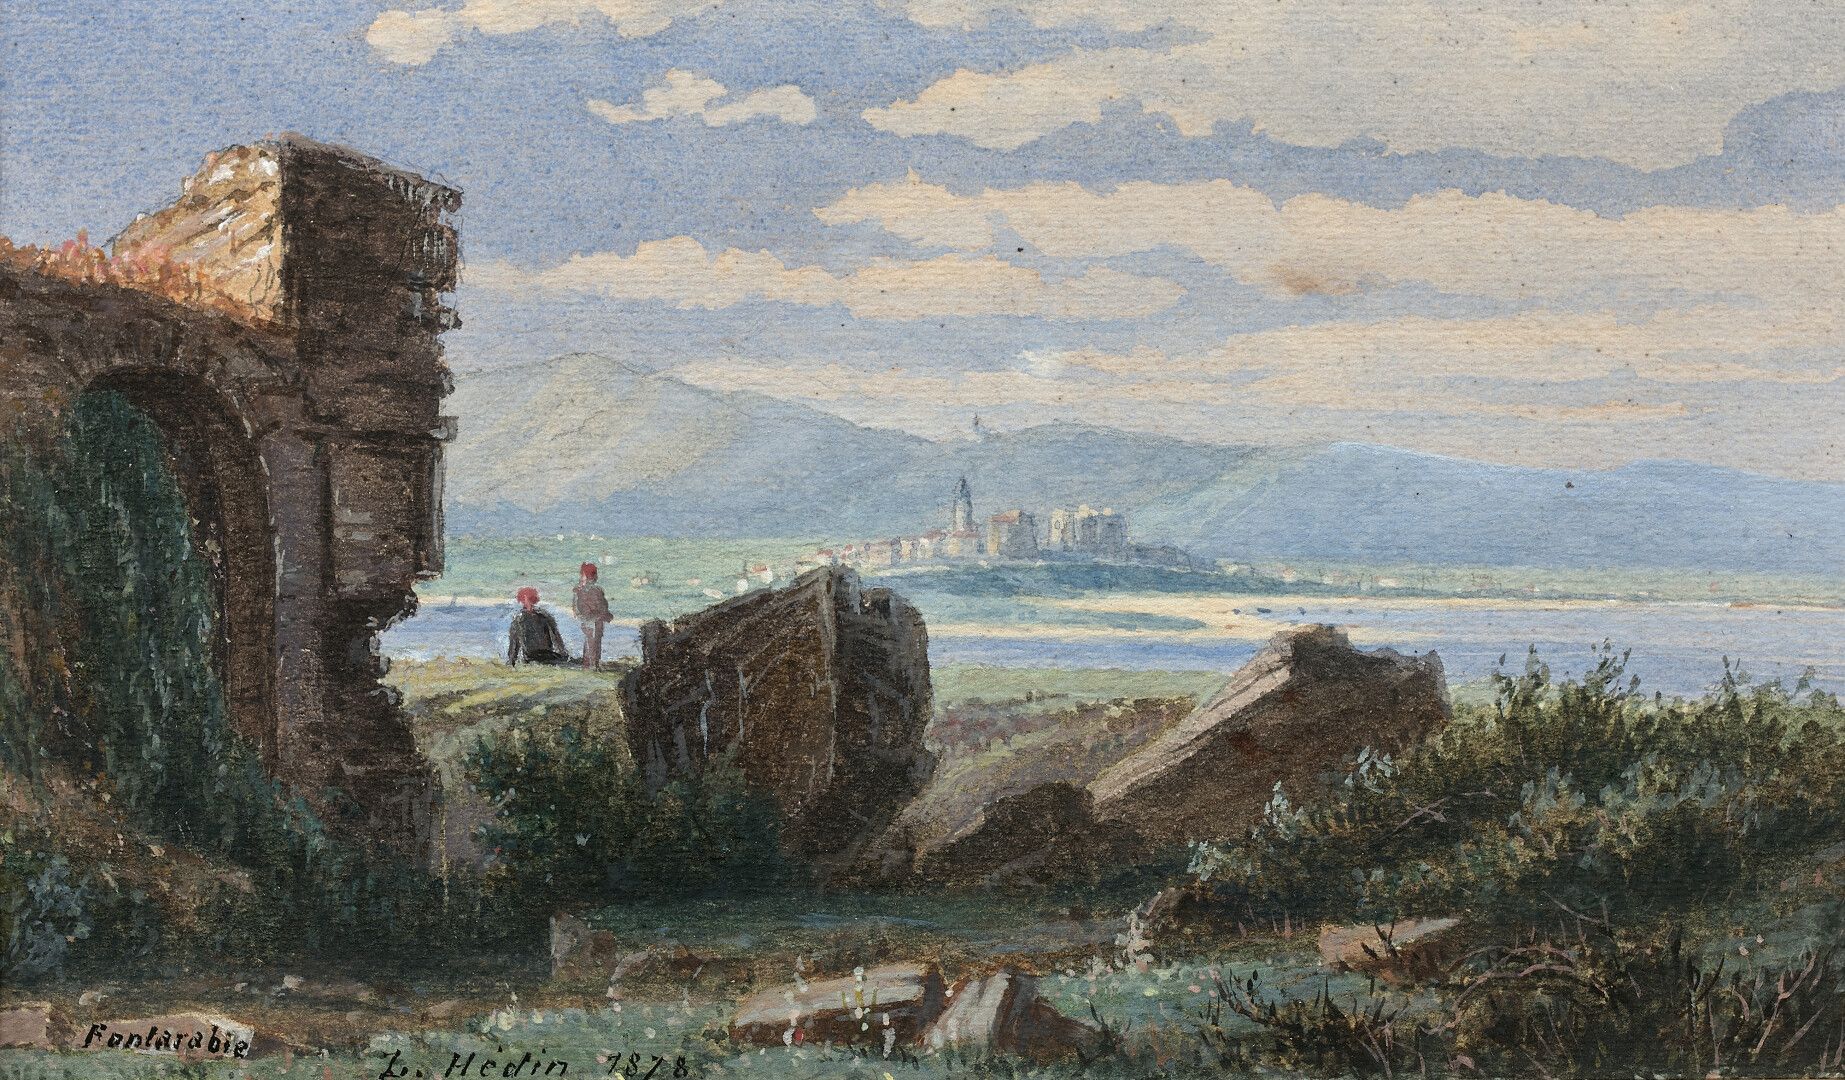 Null Louis HEDIN (1818-1886)

Fontarrabie, vue depuis le fort d'Hendaye, 1878

A&hellip;